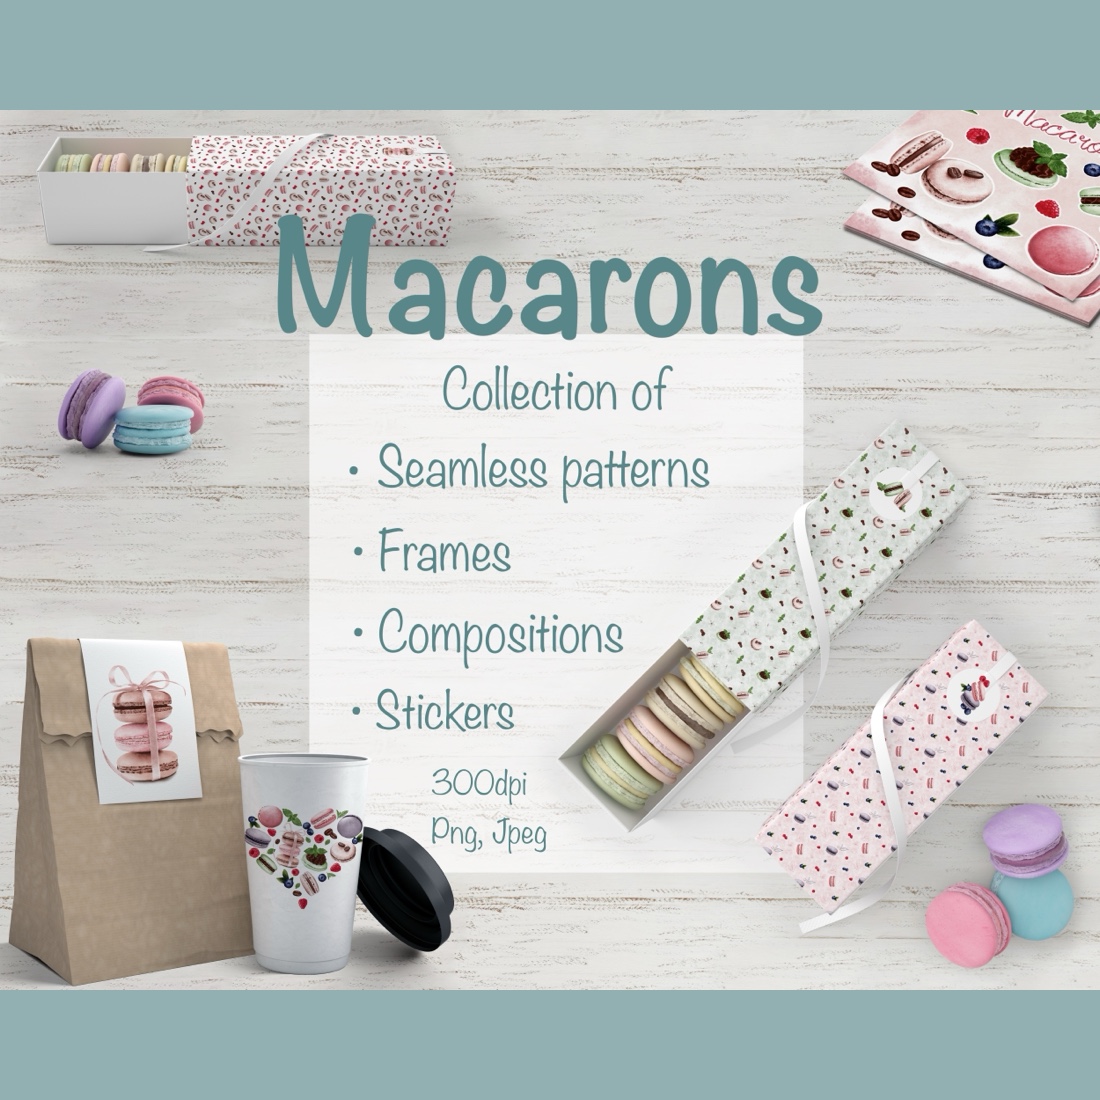 Macarons cover image.